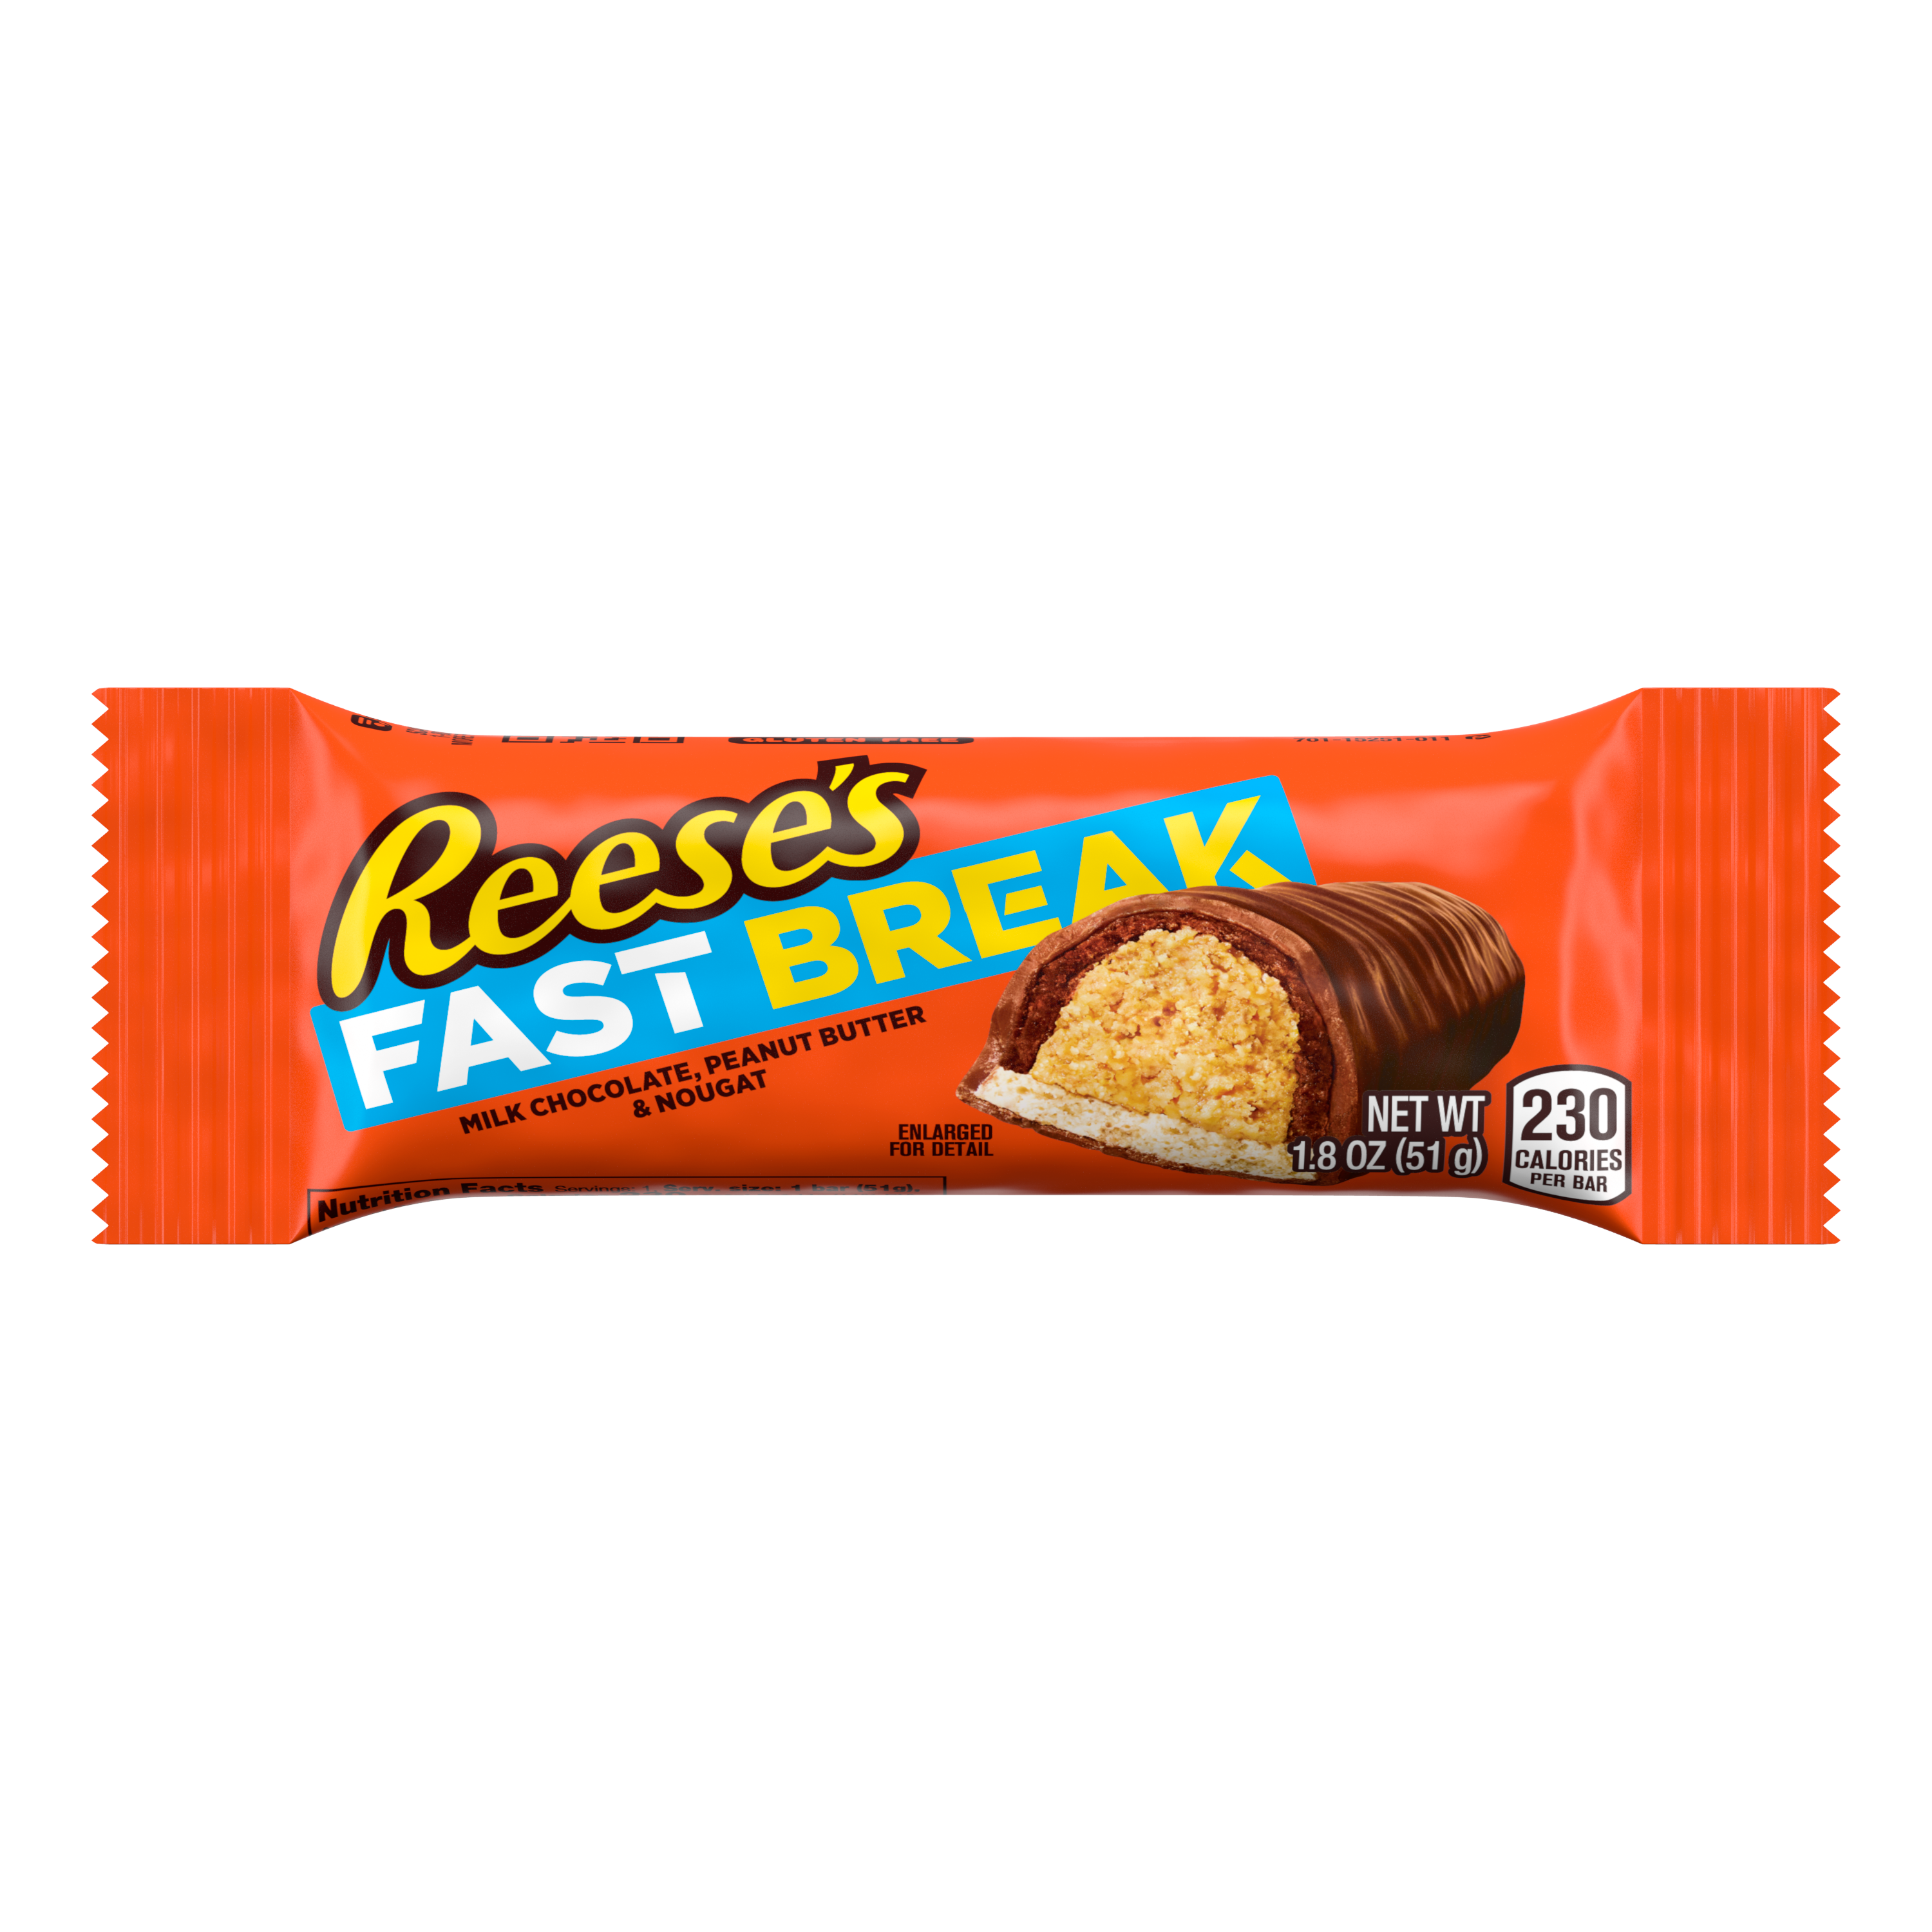 reese's fast break bar